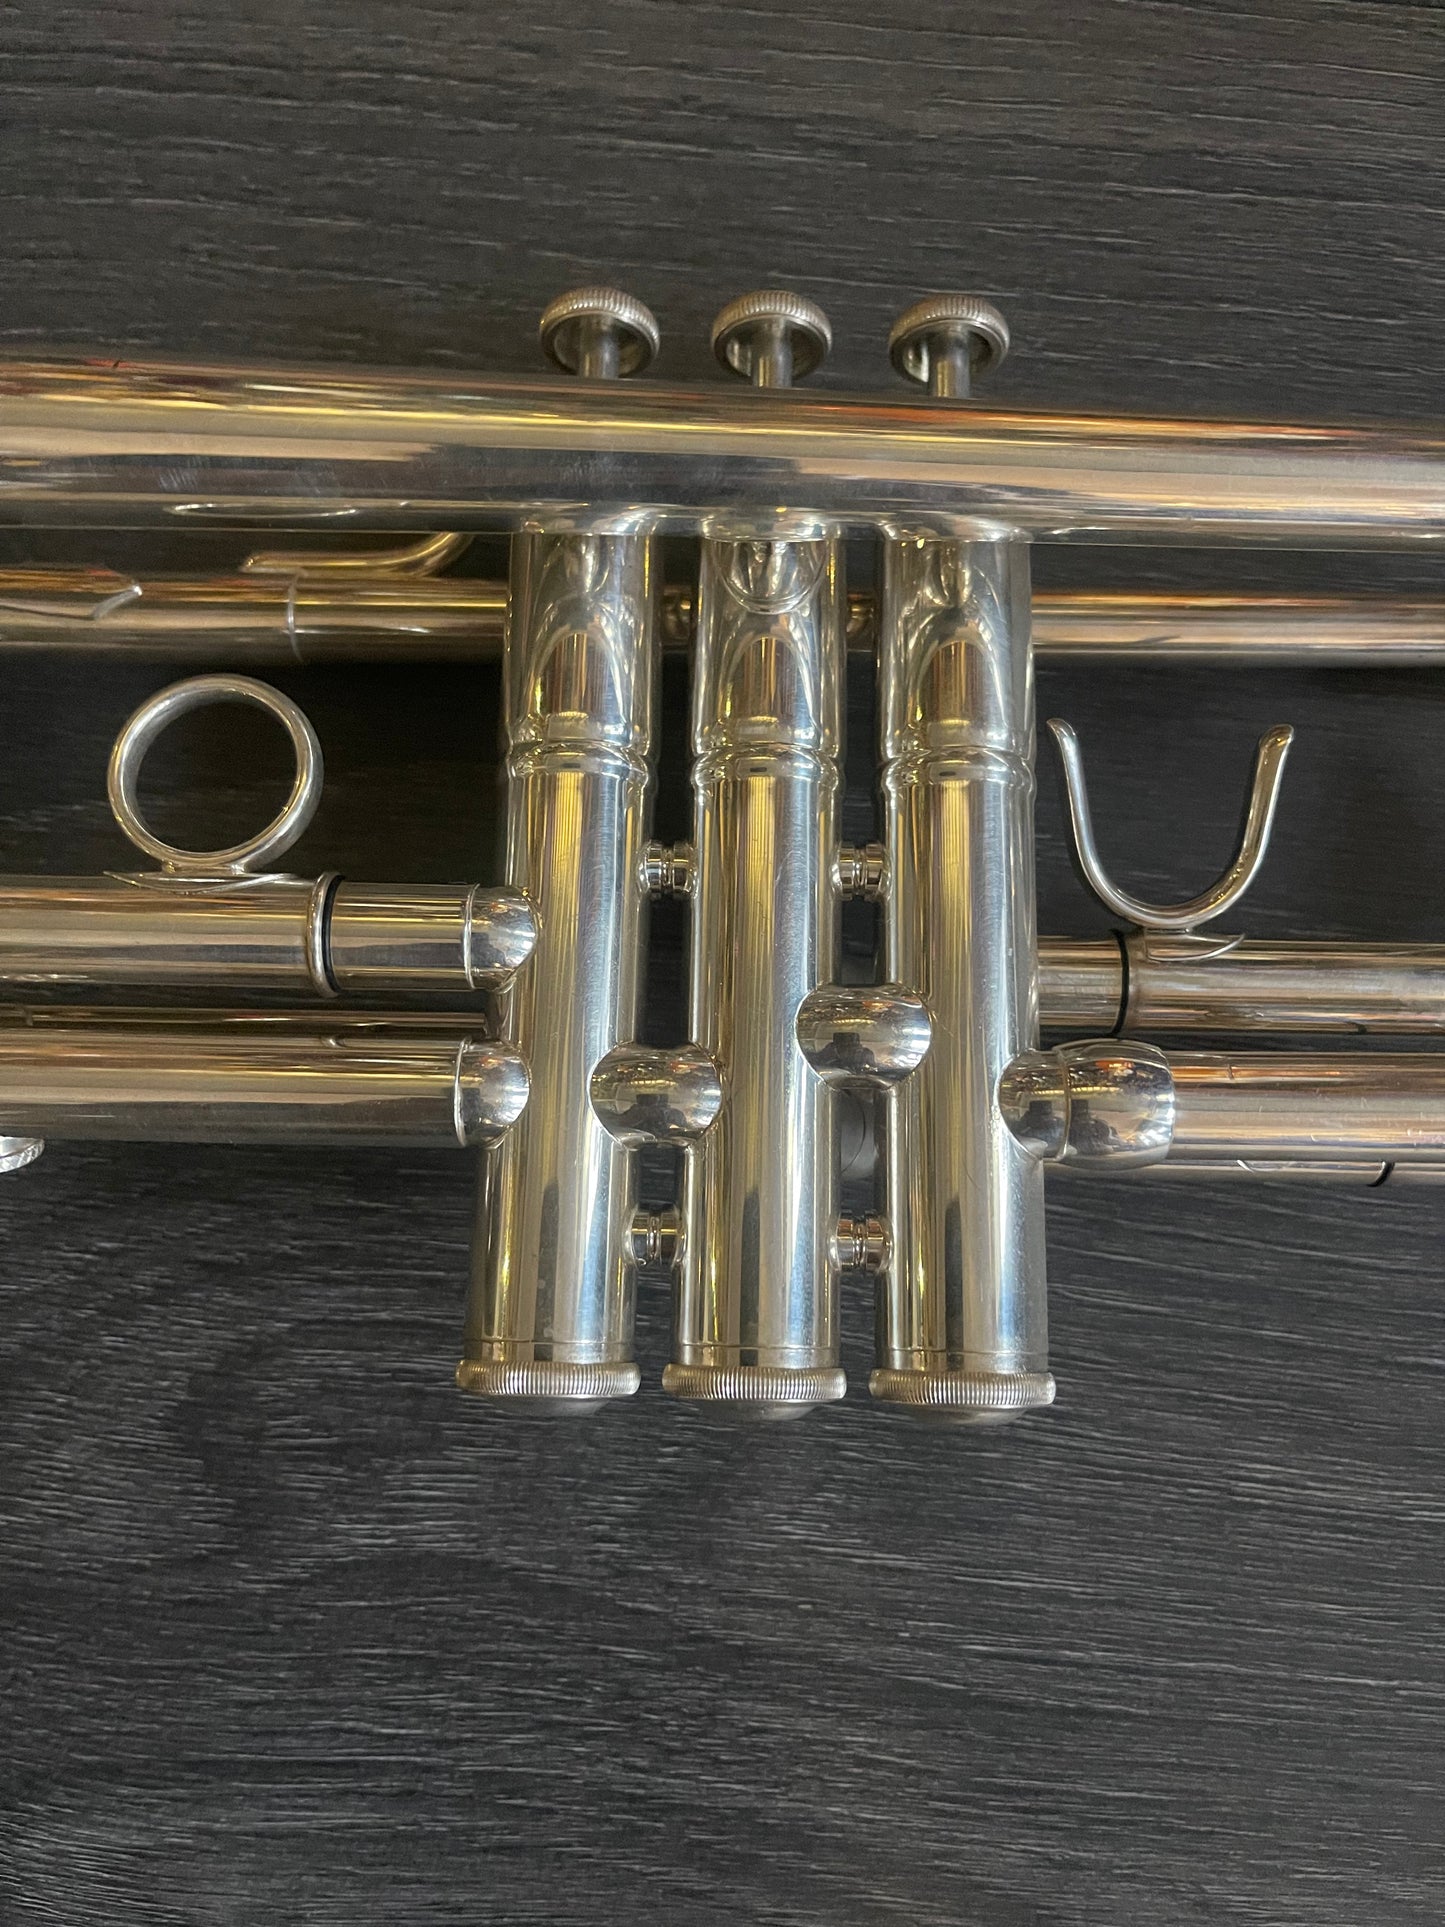 Eclipse Celeste Bb Trumpet Silver Plate #855